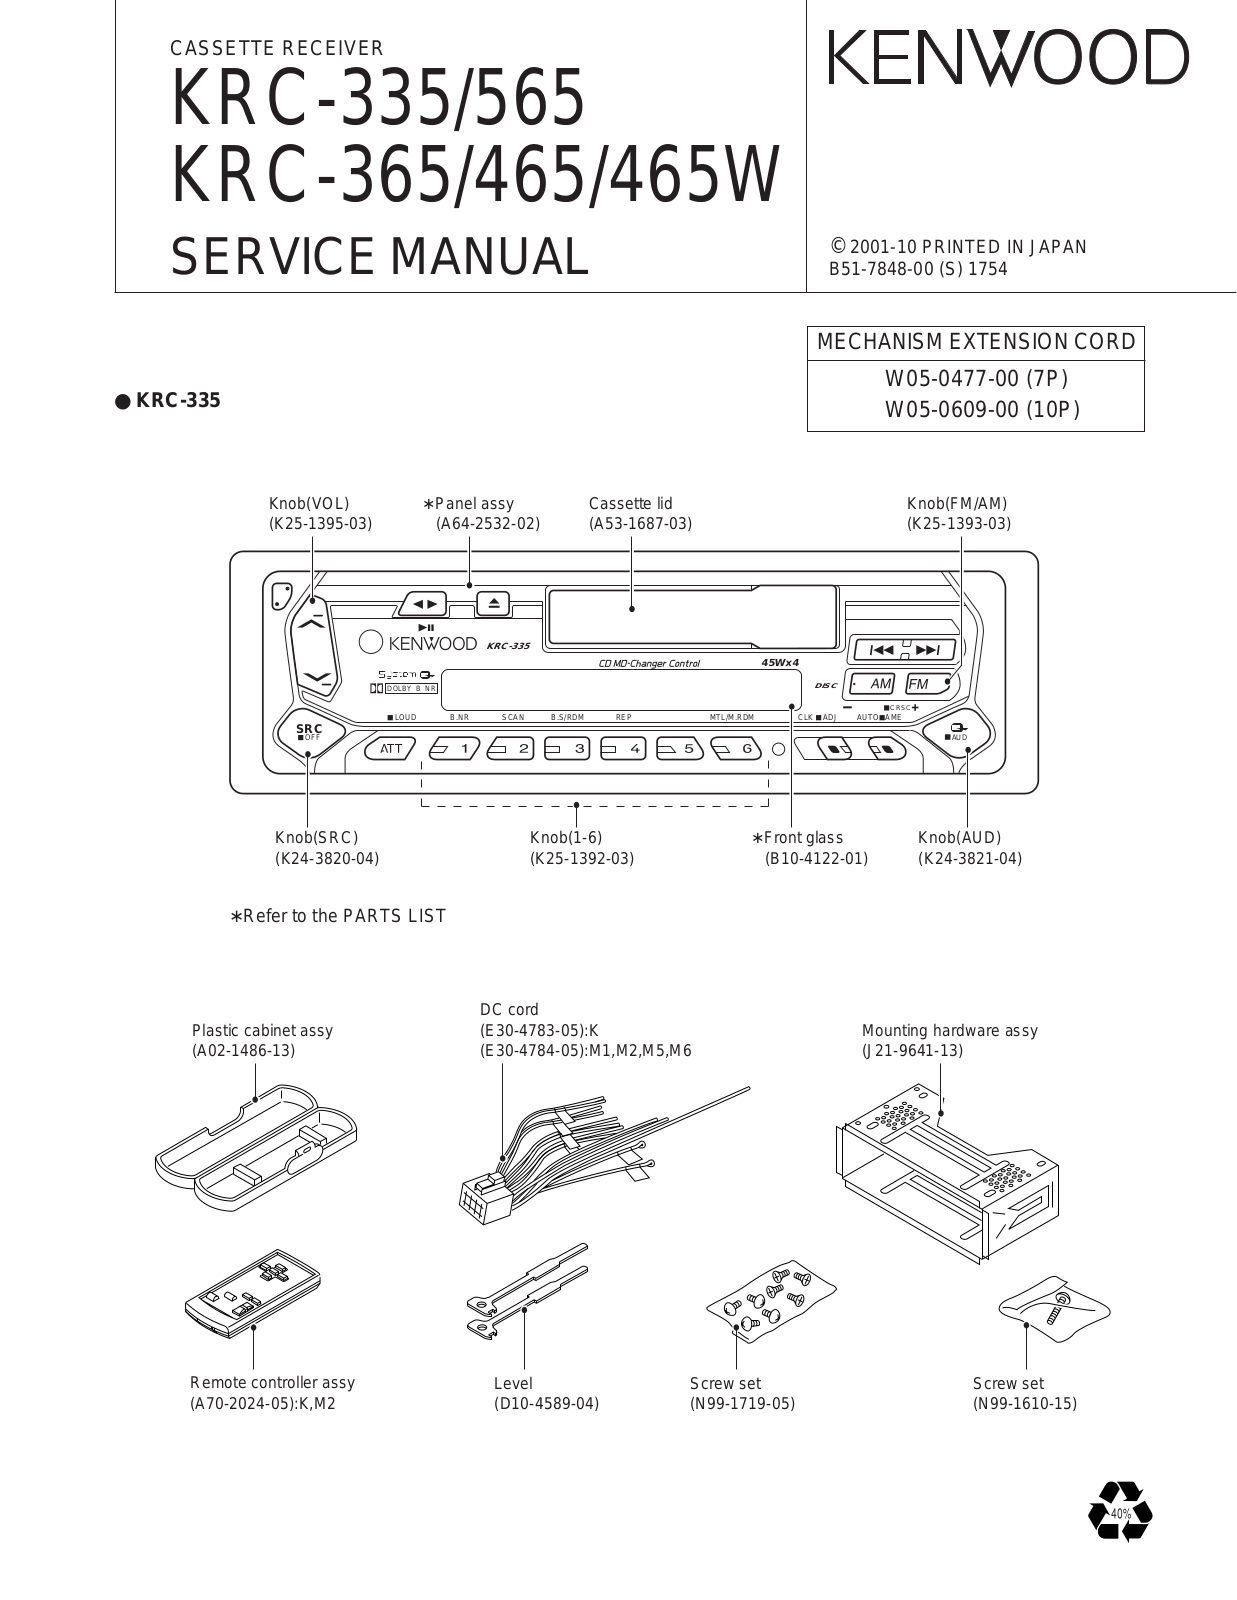 Kenwood KRC-335, KRC-565, KRC-365, KRC-465, KRC-465W Service Manual